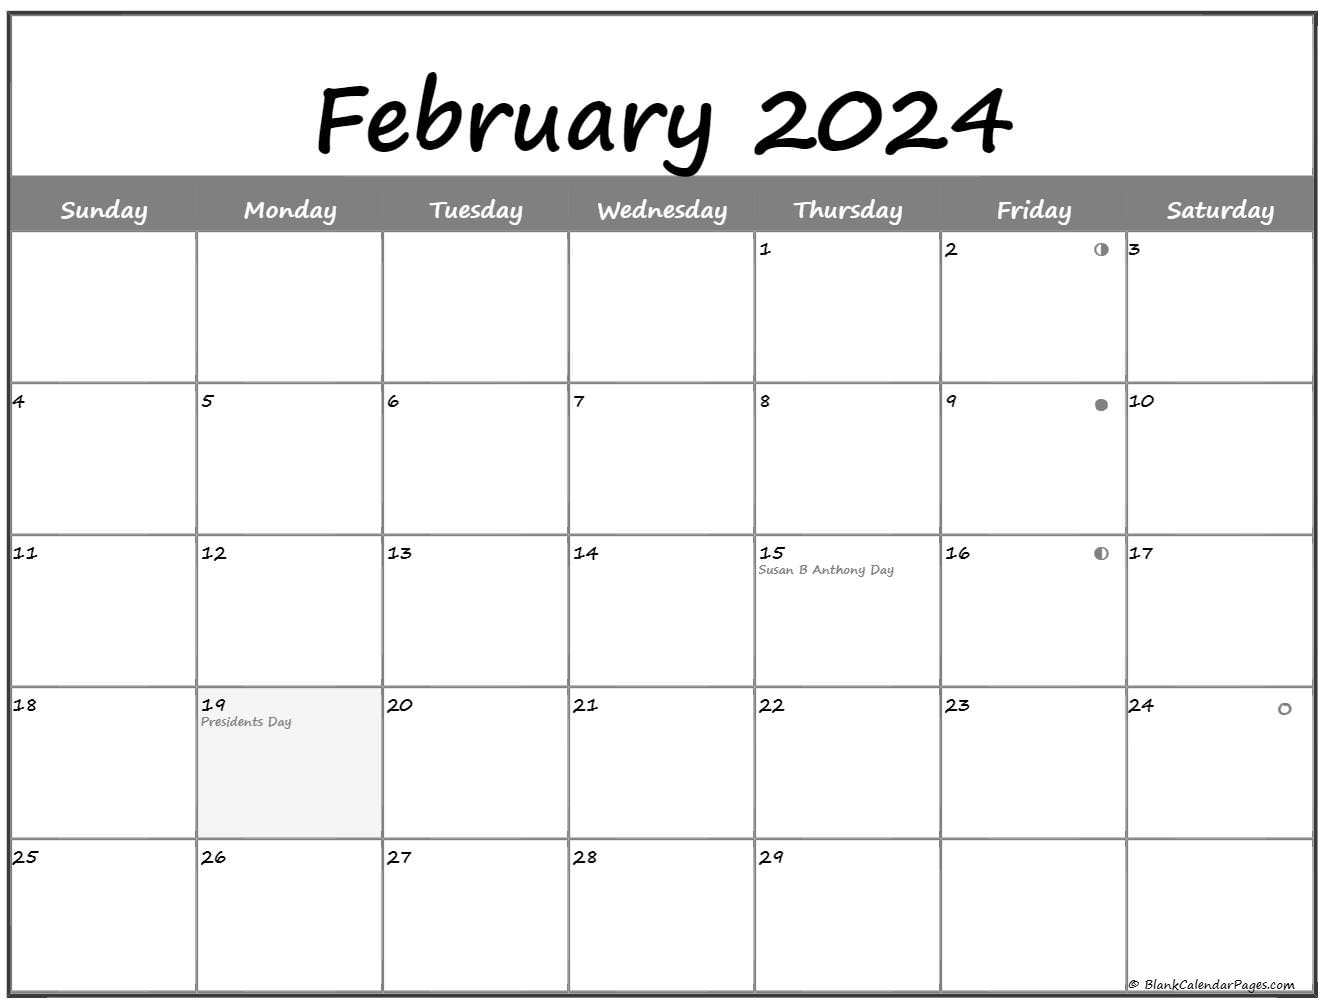 February 2021 Lunar Calendar | Moon Phase Calendar